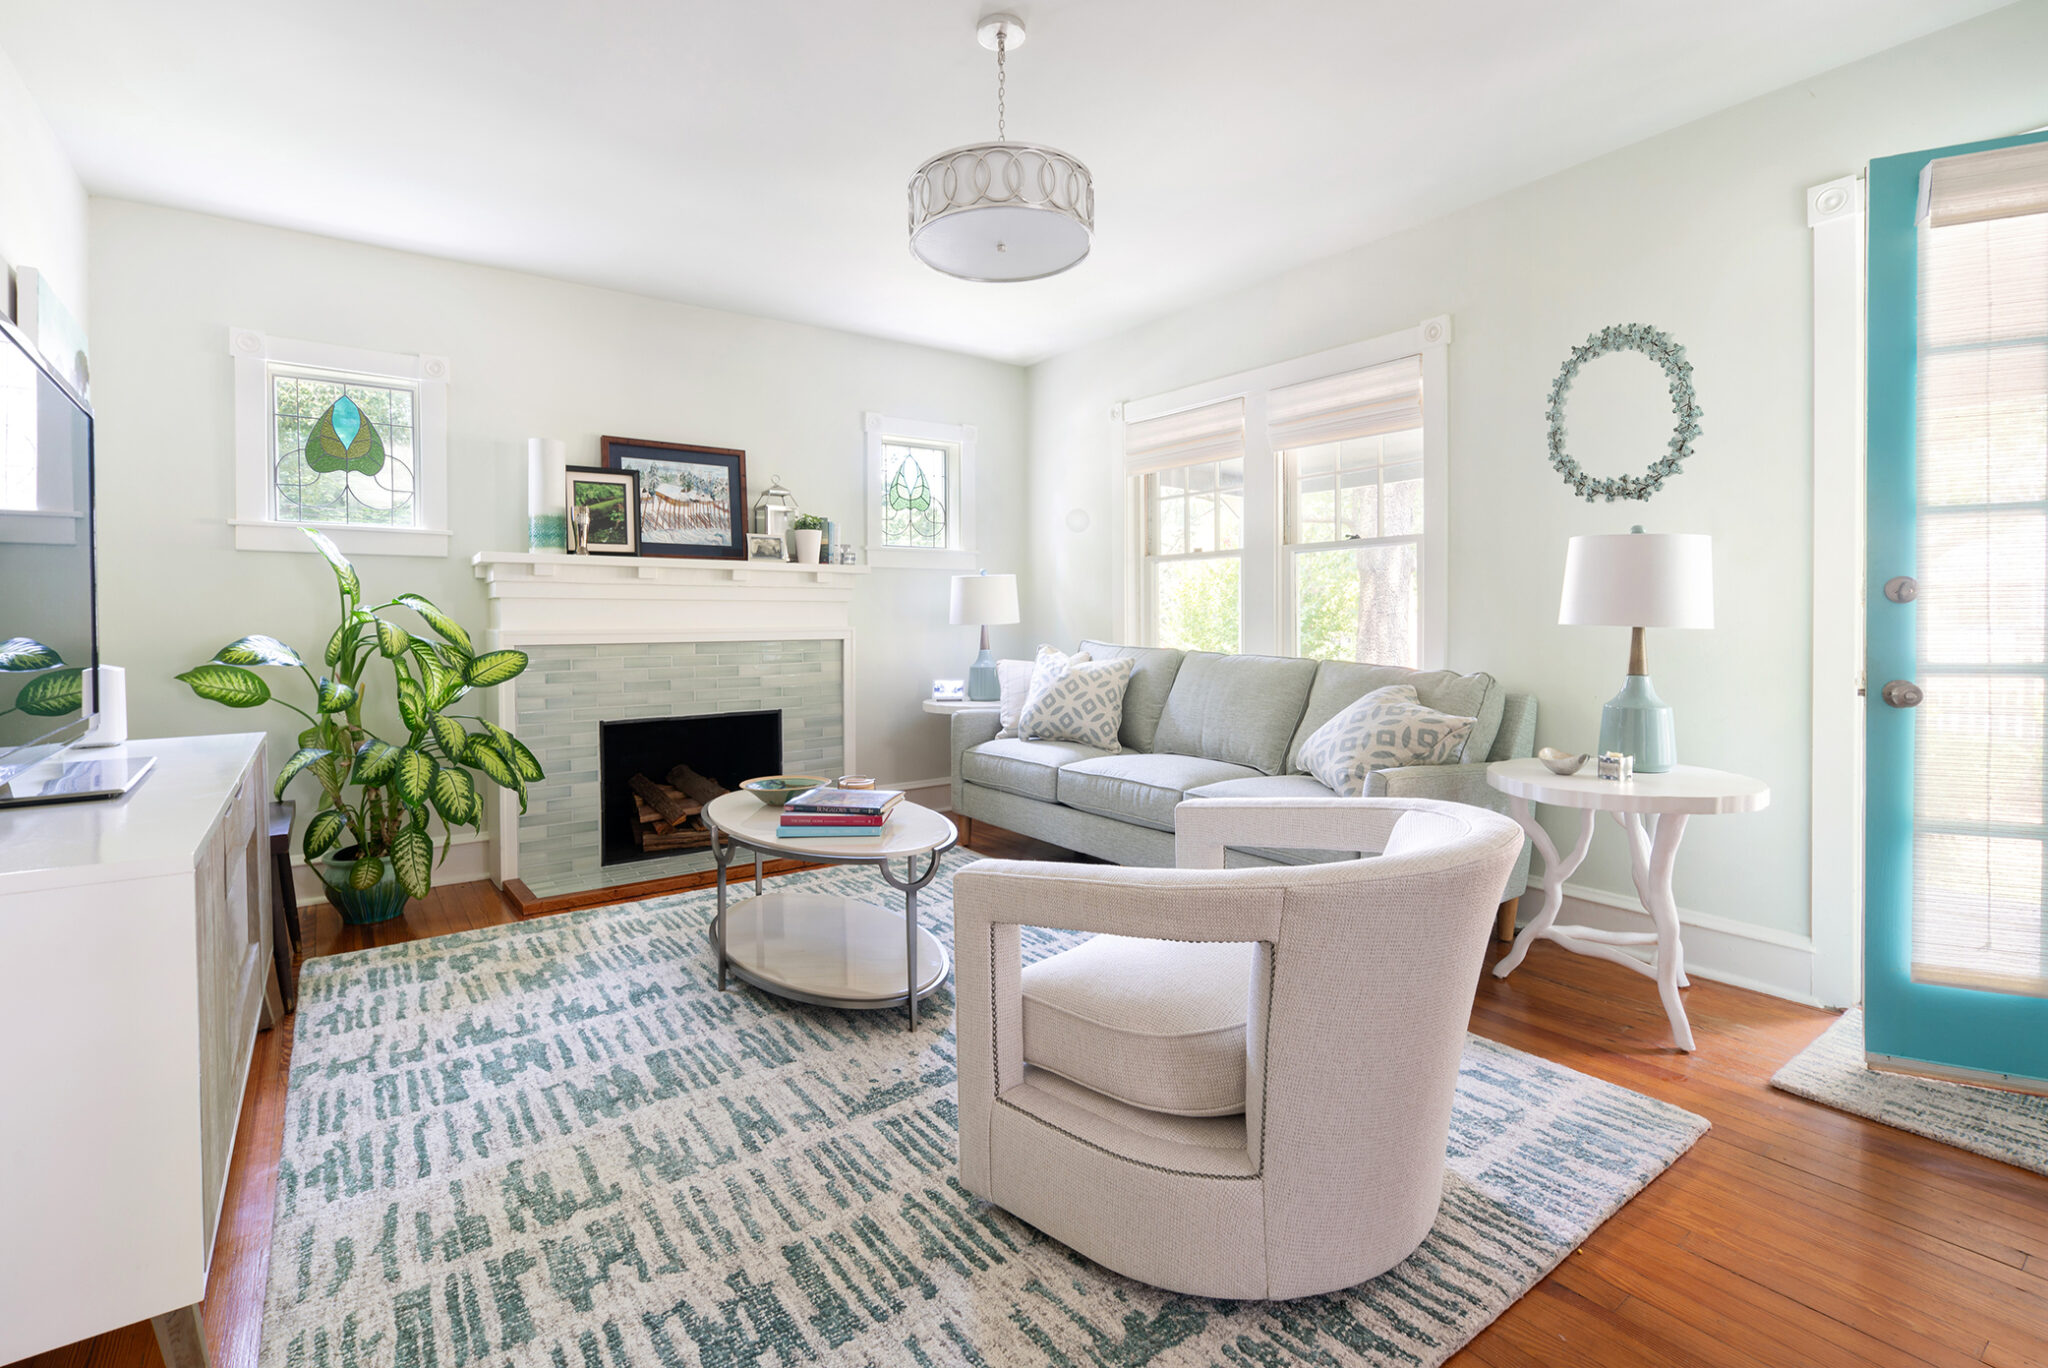 best interior design services for living rooms in Santa Rosa Beach FL, custom white furniture set against bright living room with hardwood flooring